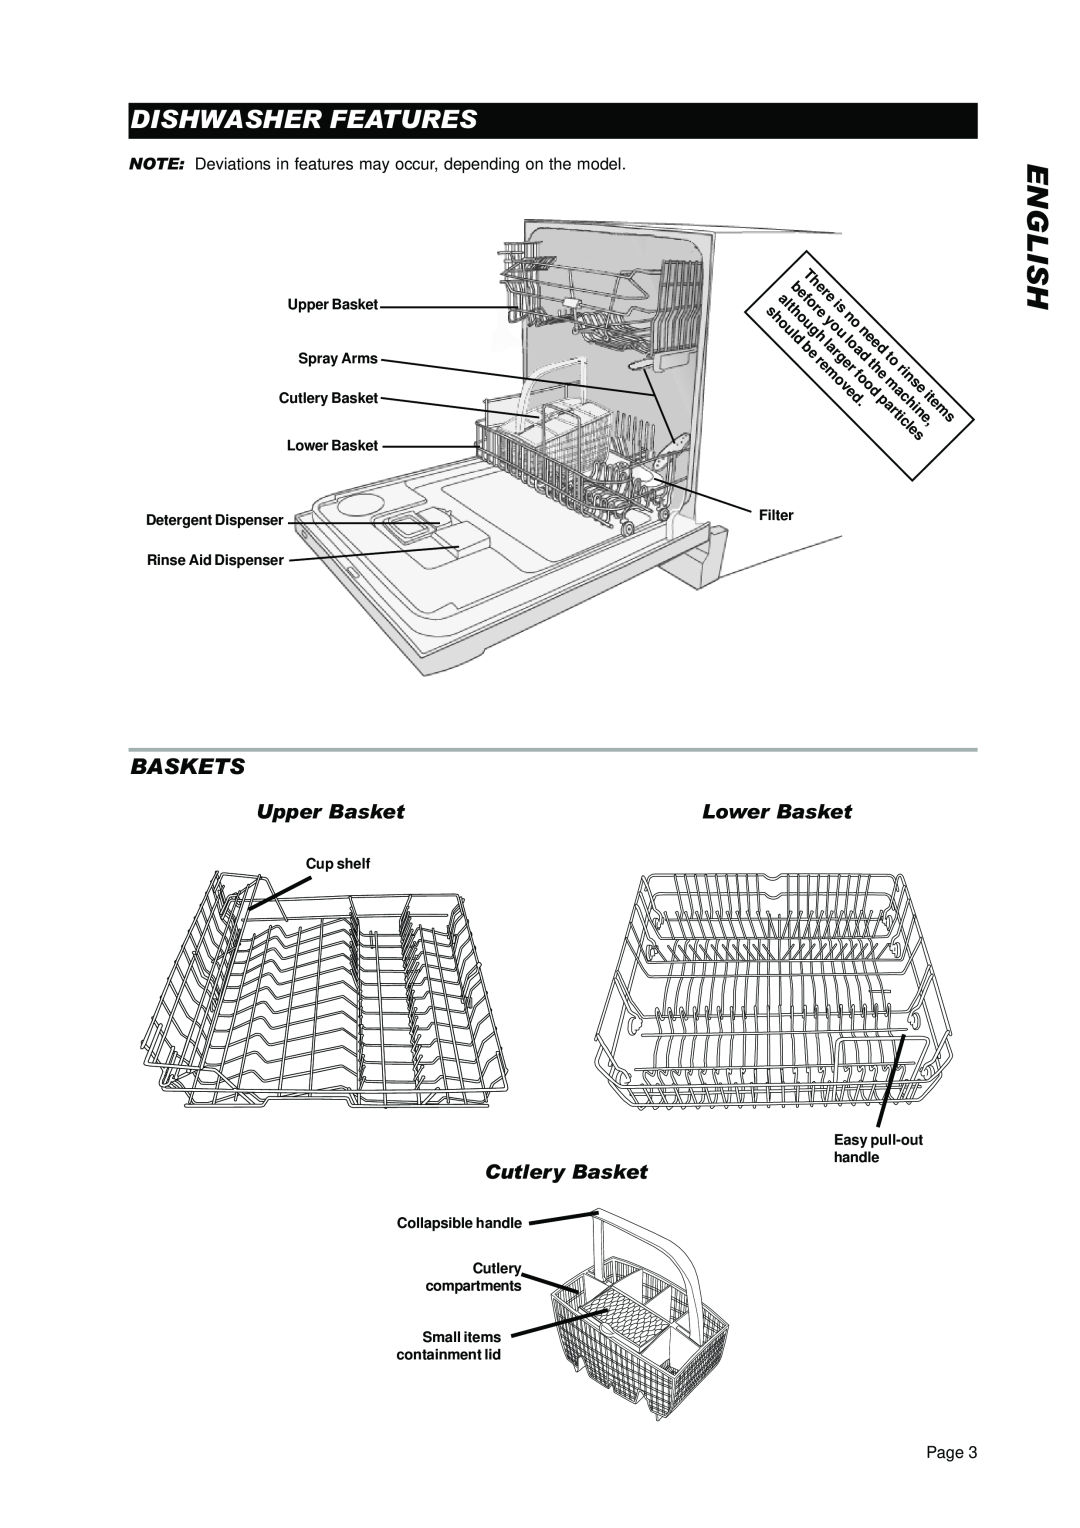 Asko D3250 Dishwasher Features, Baskets, Upper Basket, Lower Basket, Cutlery Basket, English, before, rinse, load, machine 